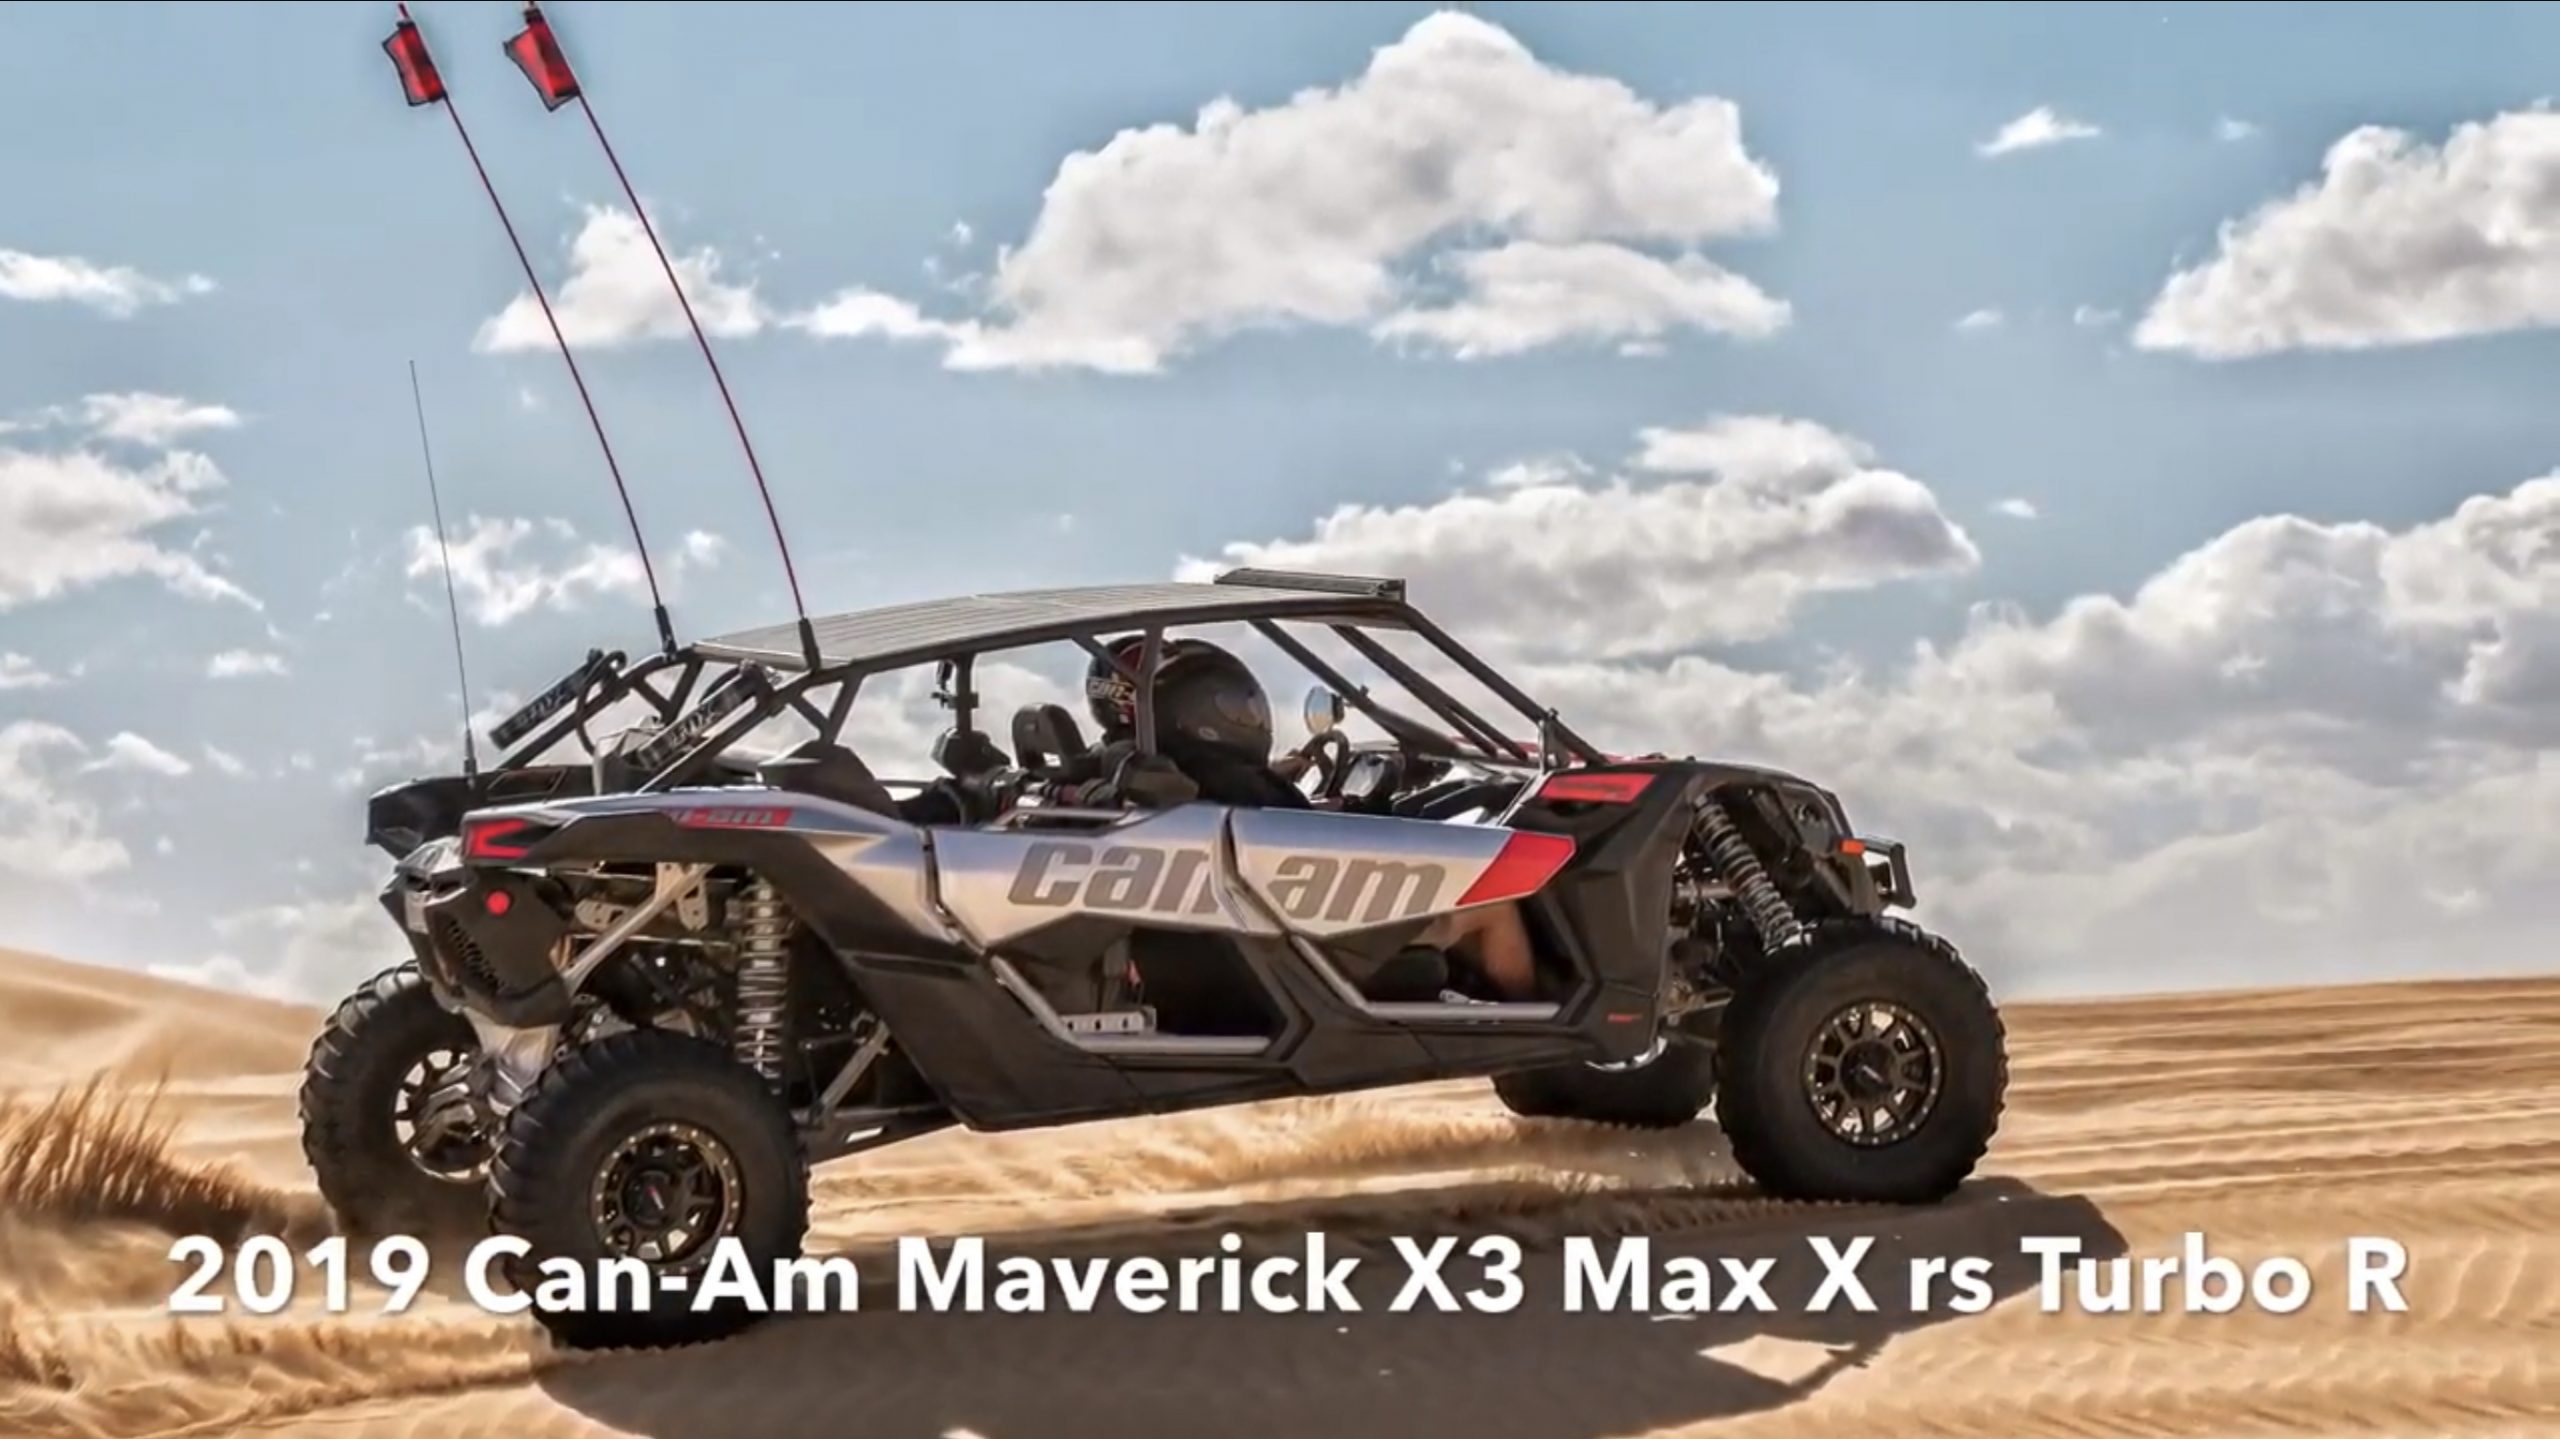 2019 Can-Am Maverick X3 Max X rs Turbo R